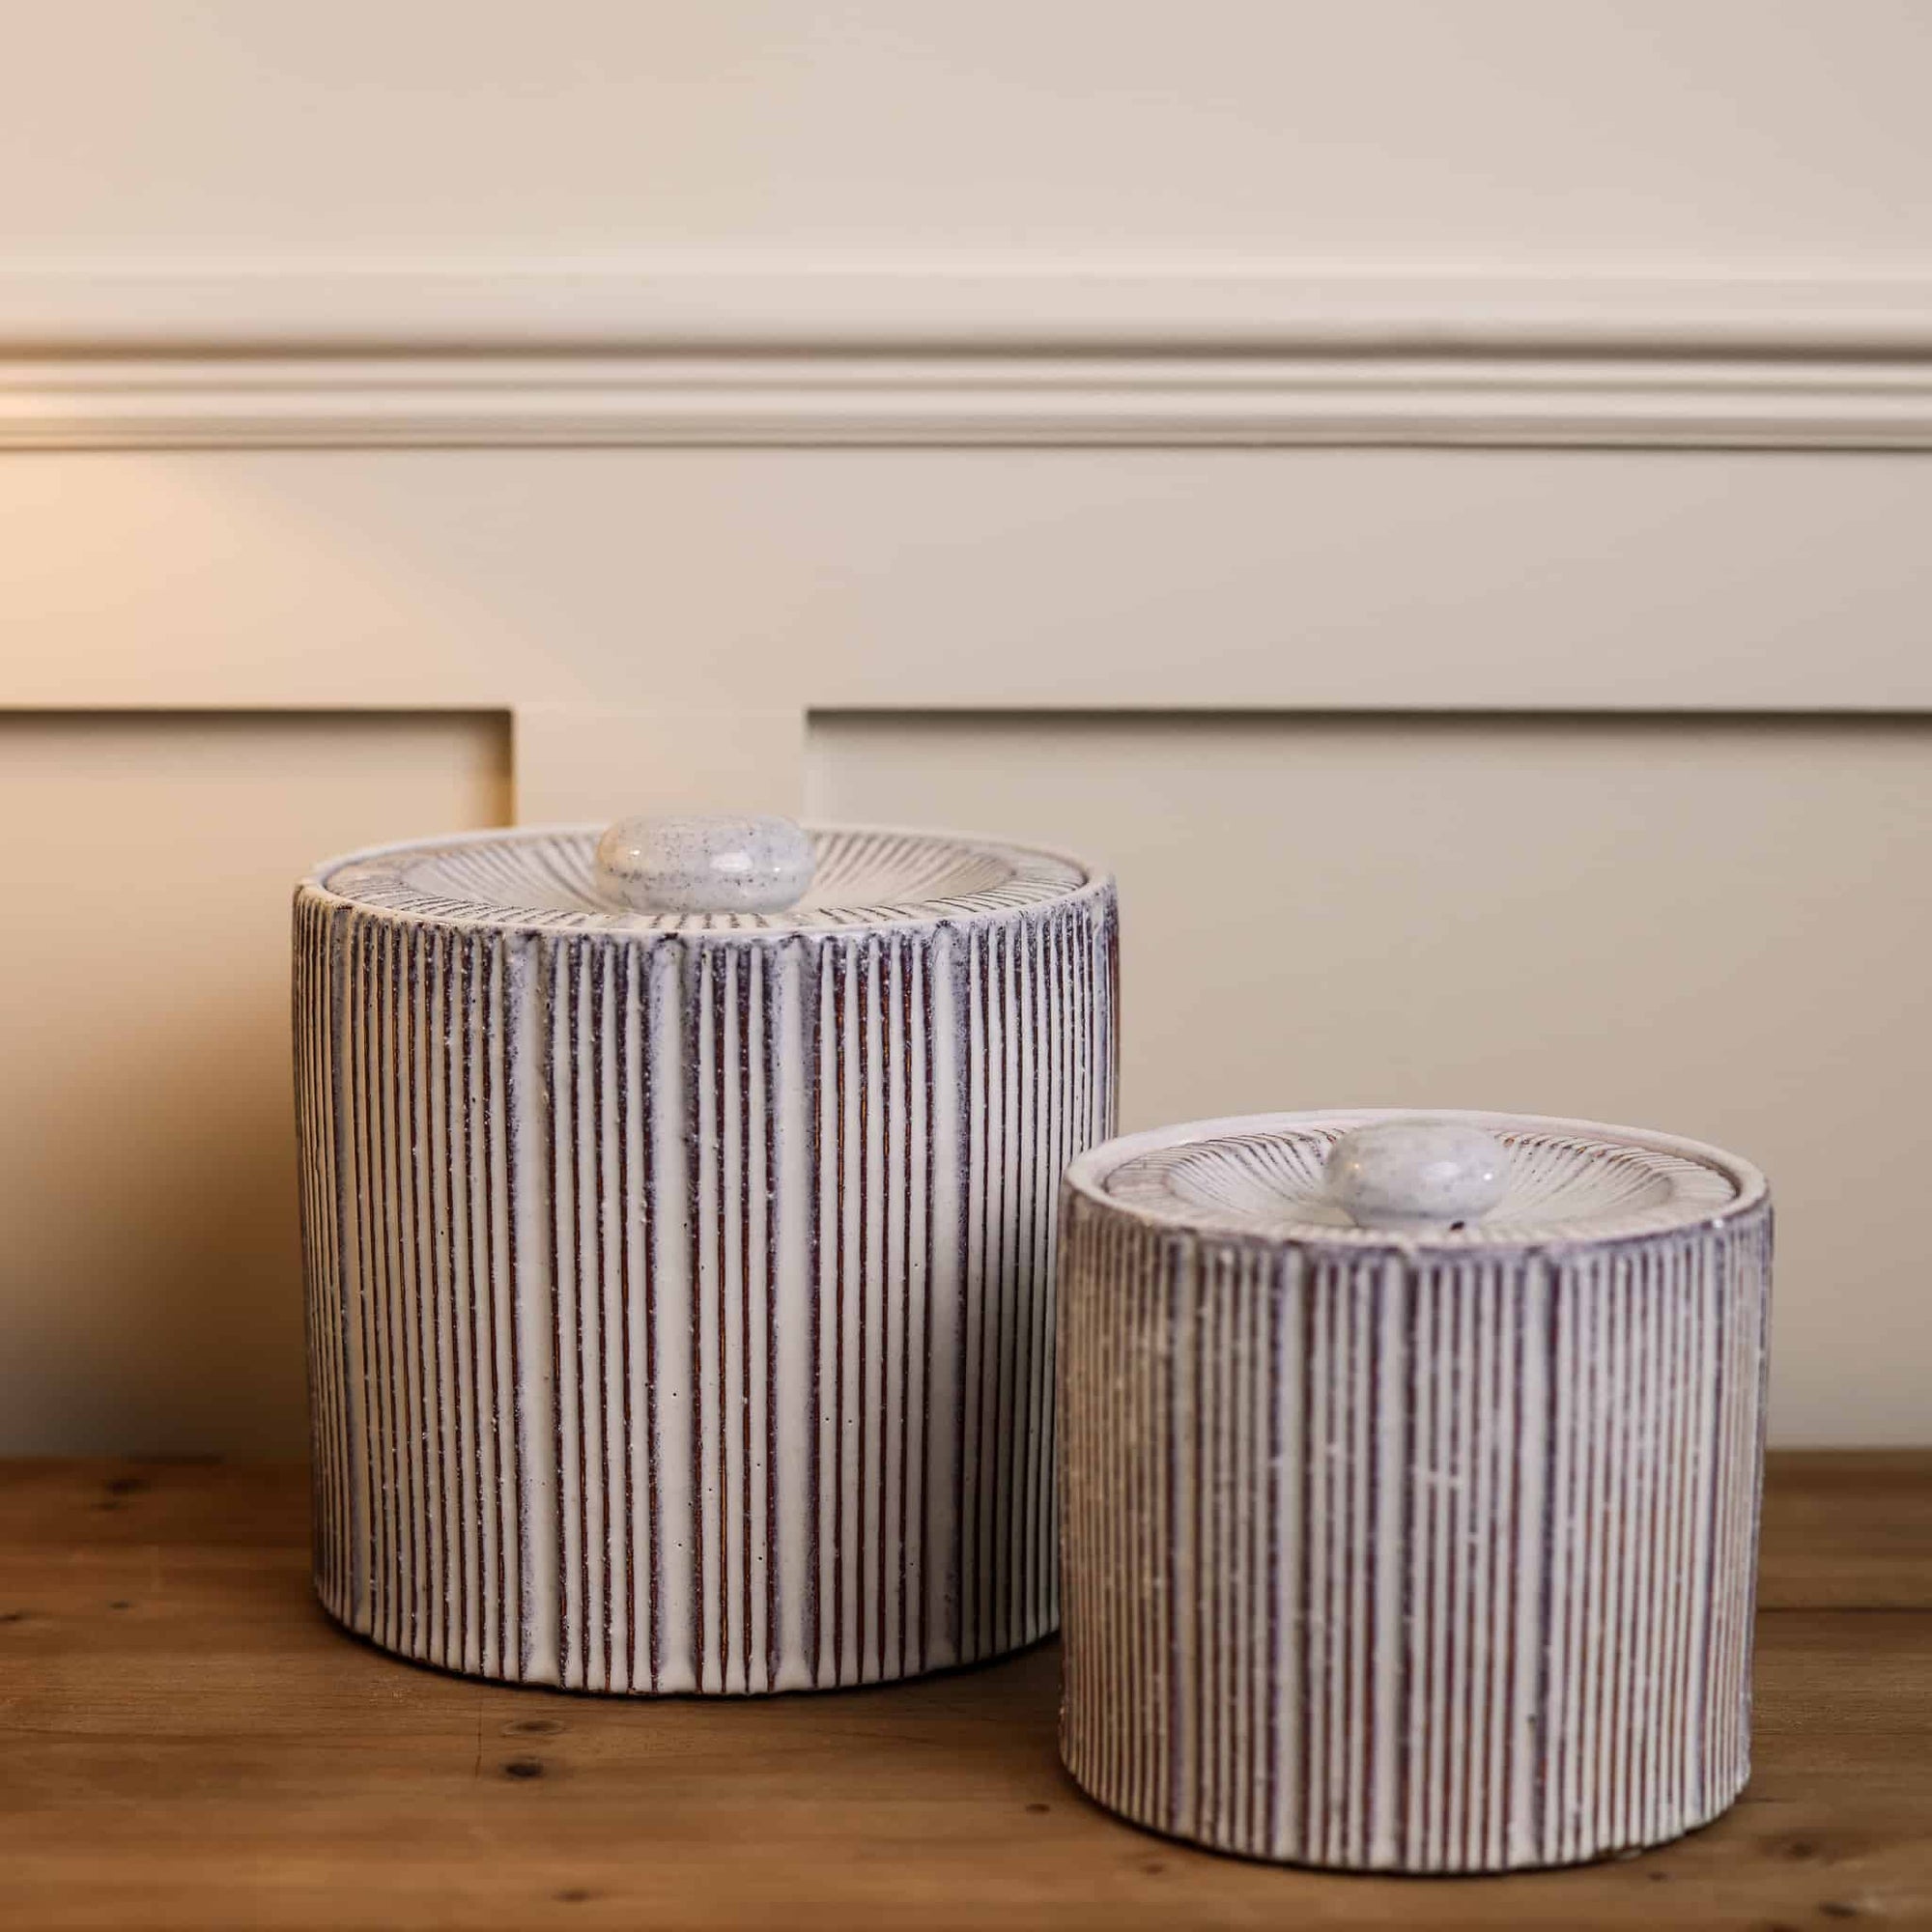 2 red and white striped ceramic storage jars.